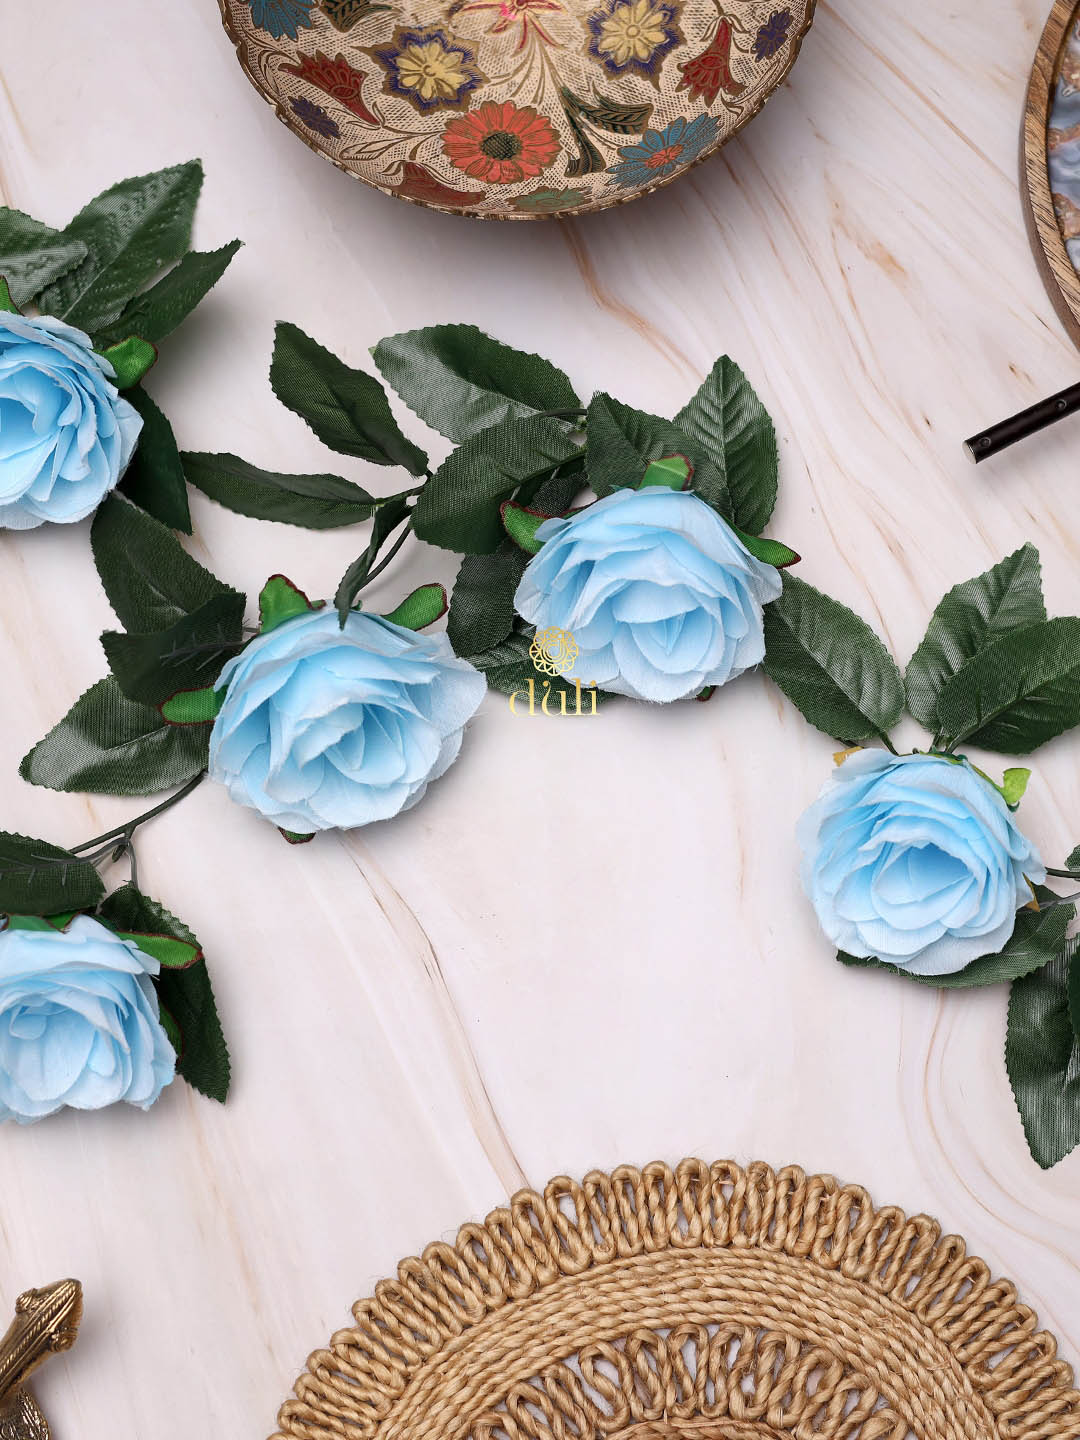 DULI Blue & Green Rose Artificial Flower Creeper Price in India